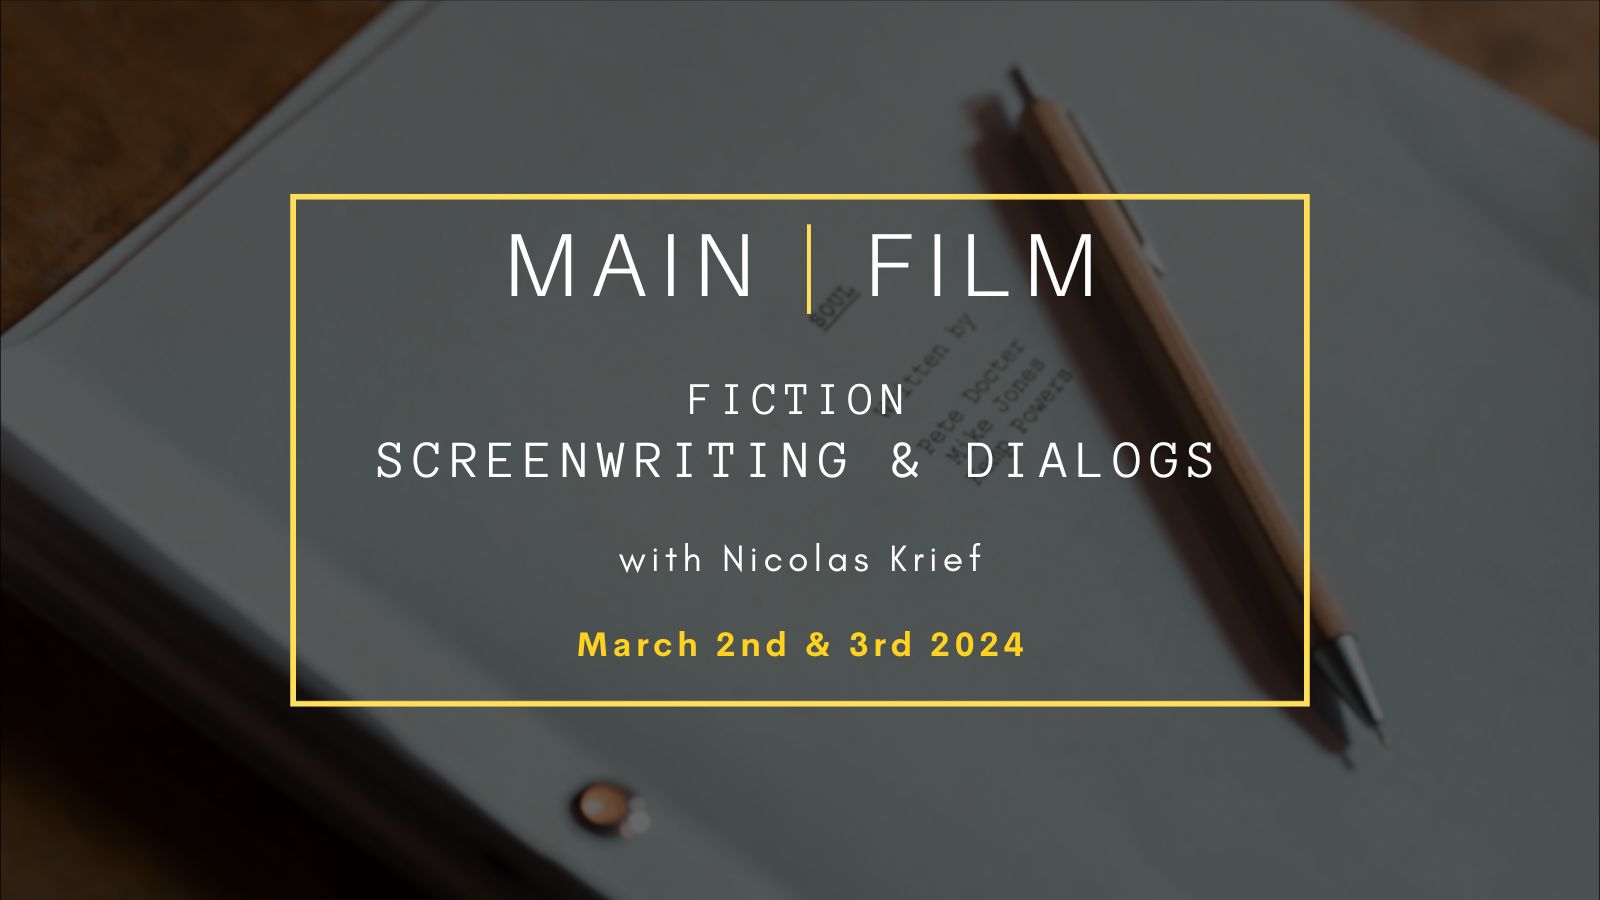 Fiction screenwriting & dialogs